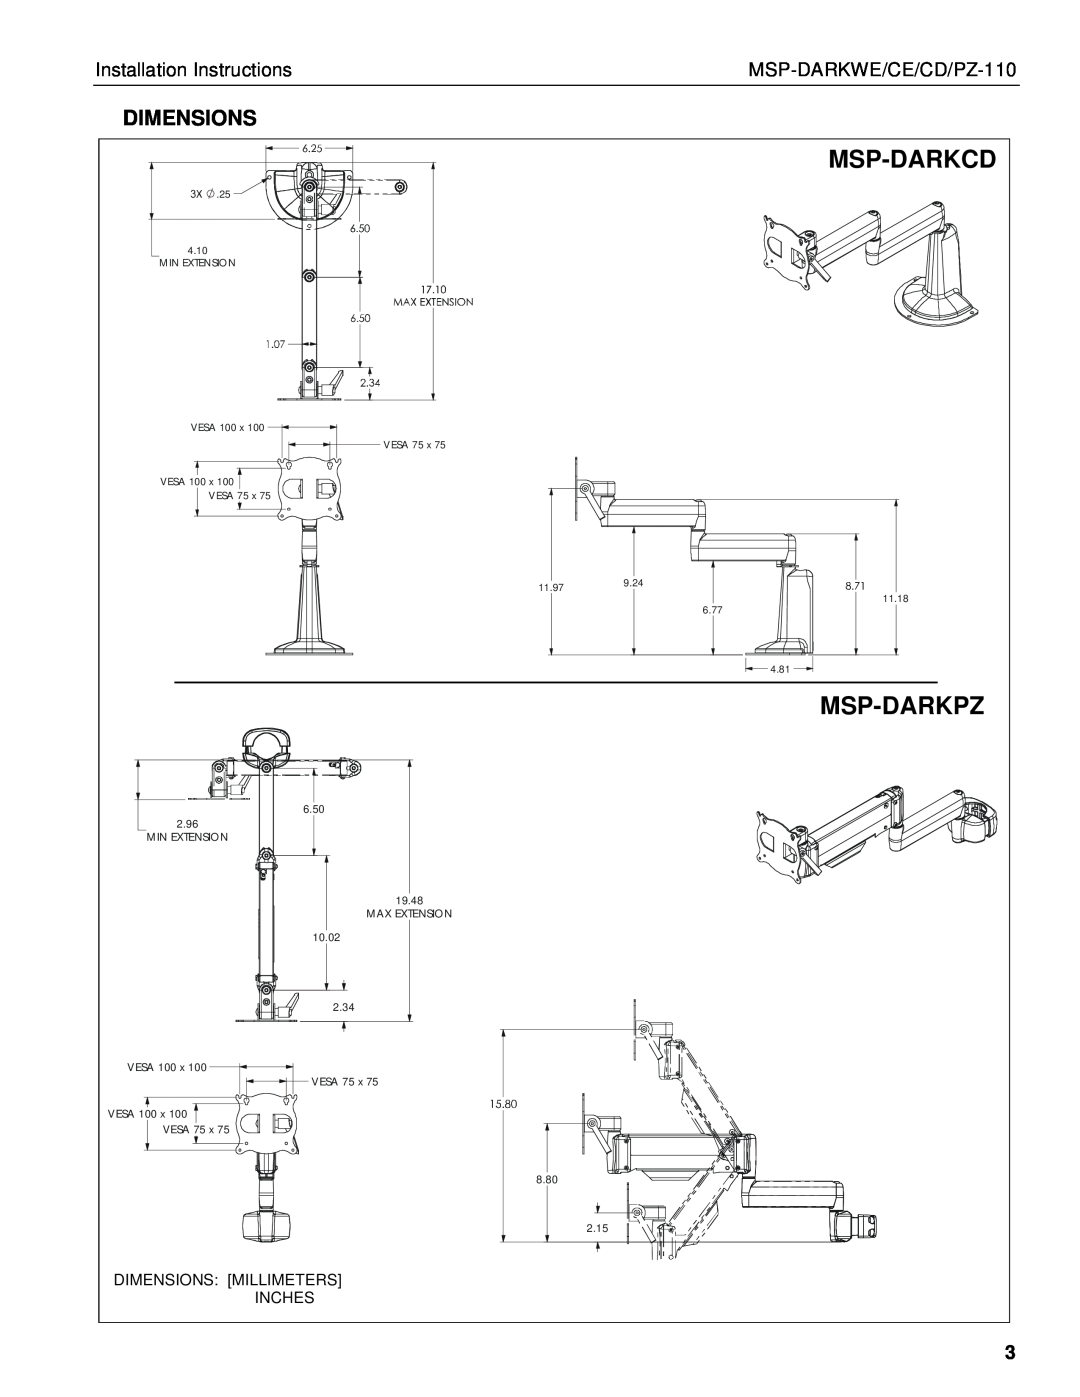 Chief Manufacturing MSP-DARKWE/CE/CD/PZ-110 manual Msp-Darkcd, Msp-Darkpz, Dimensions, Installation Instructions, Inches 